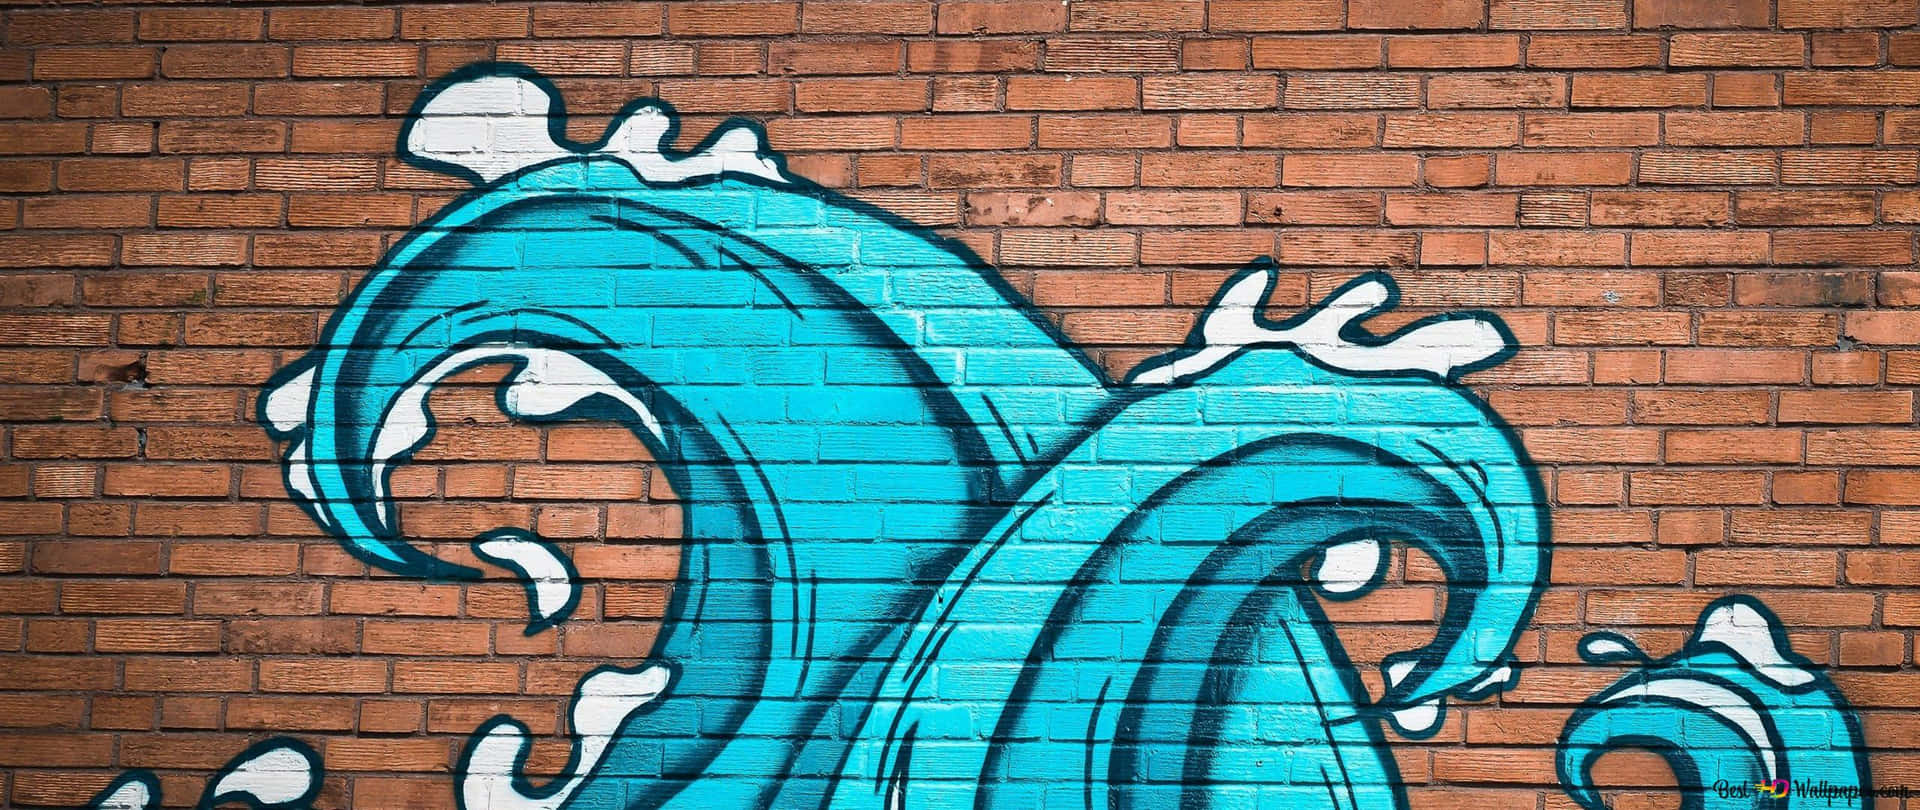 Graffiti Wall Art Of Waves Wallpaper